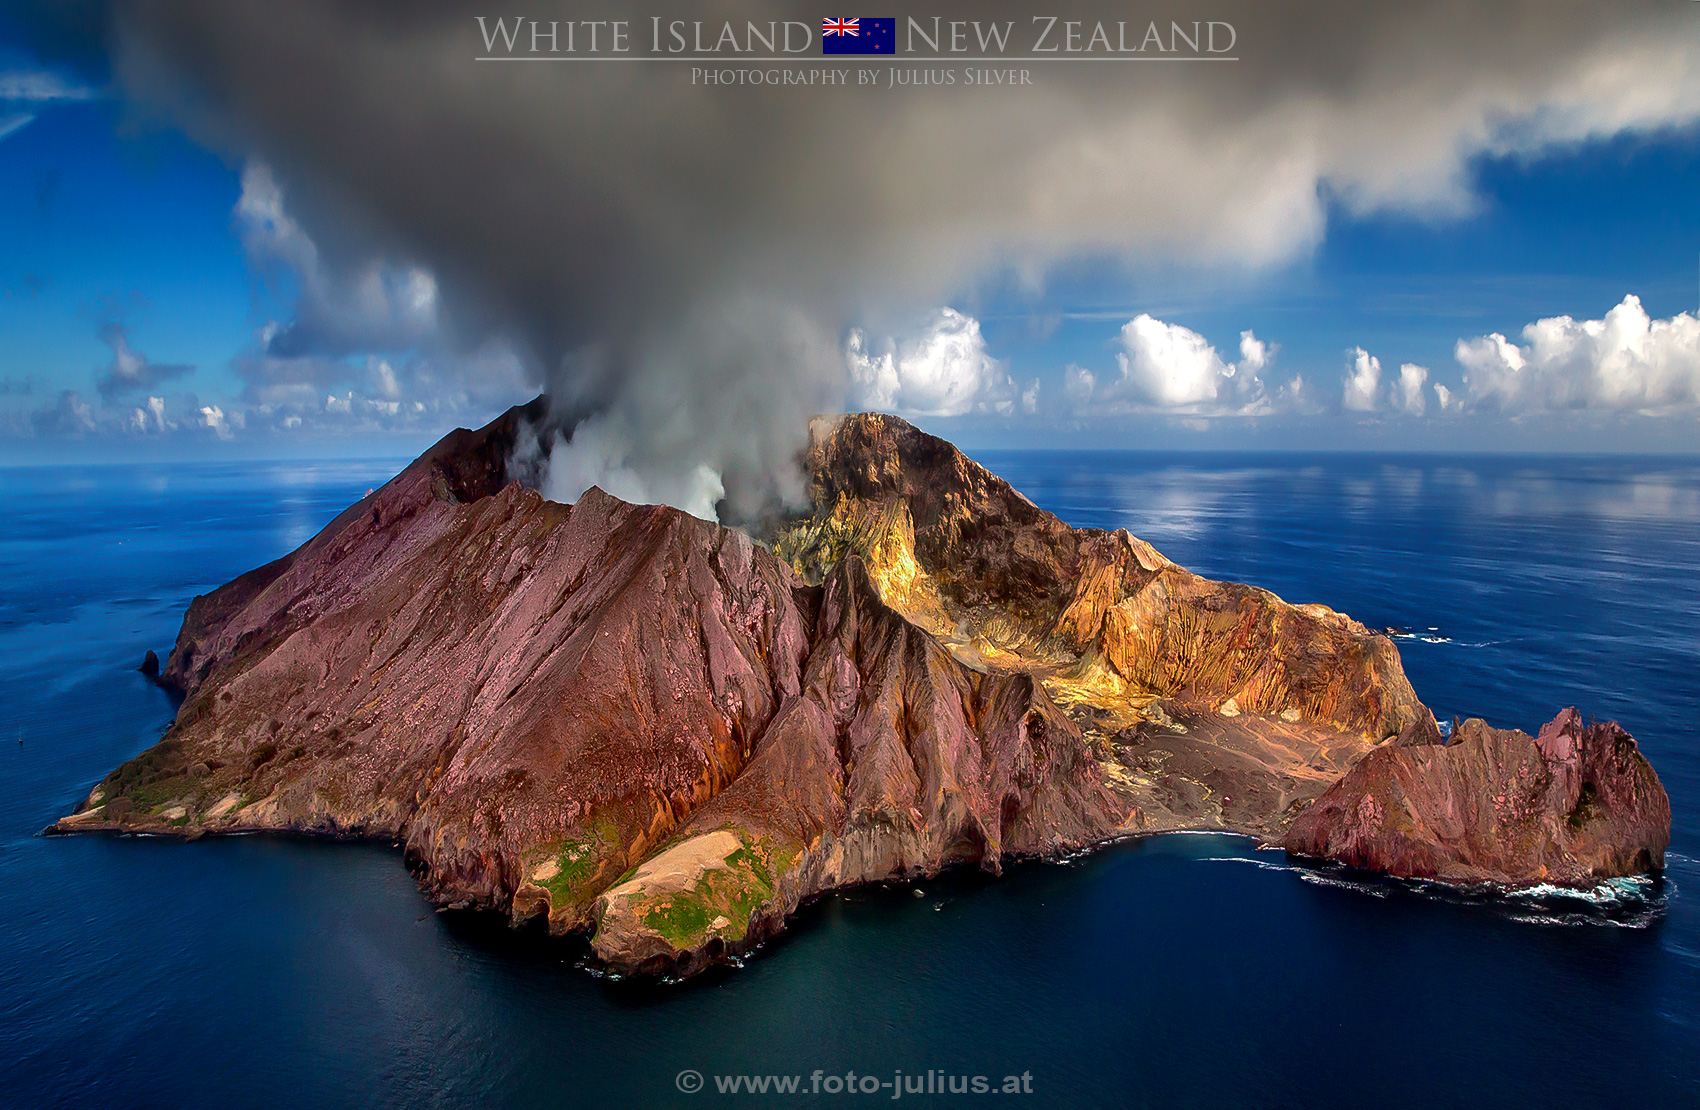 NewZealand003a_White_Island.jpg, 771kB